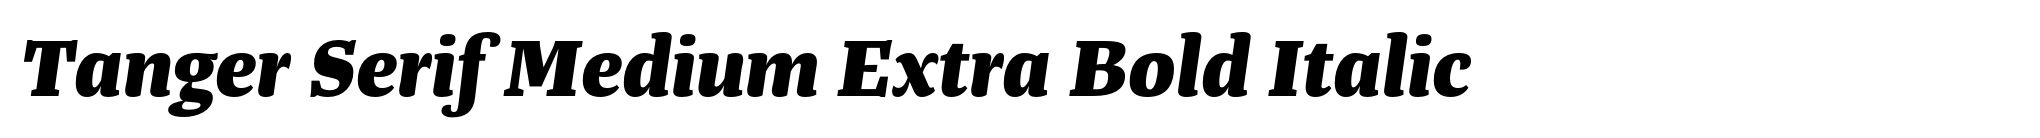 Tanger Serif Medium Extra Bold Italic image